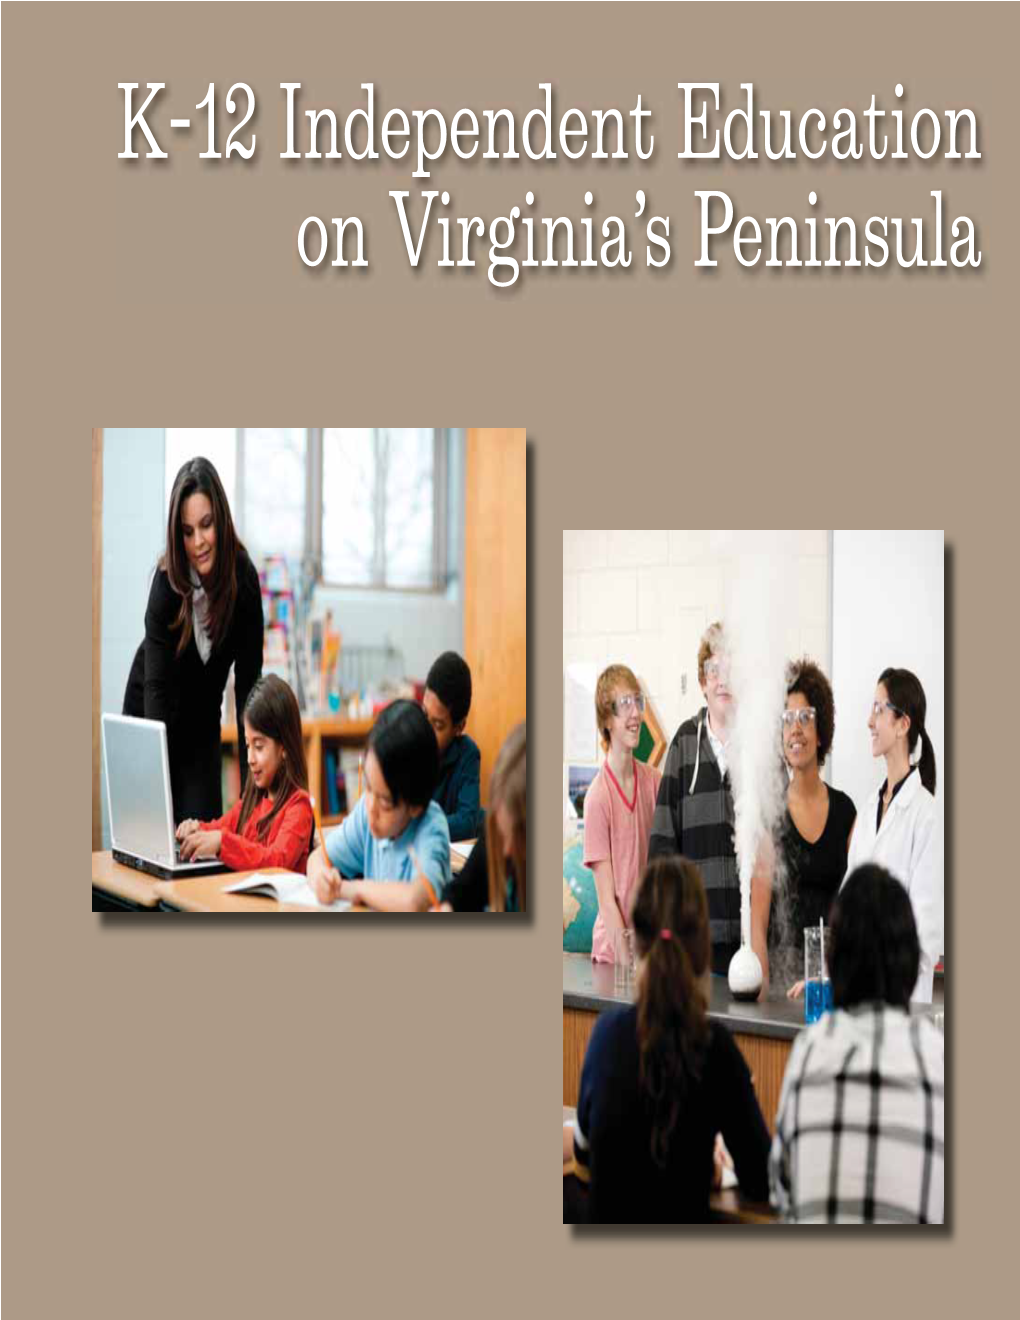 K-12 Independent Education on Virginia's Peninsula